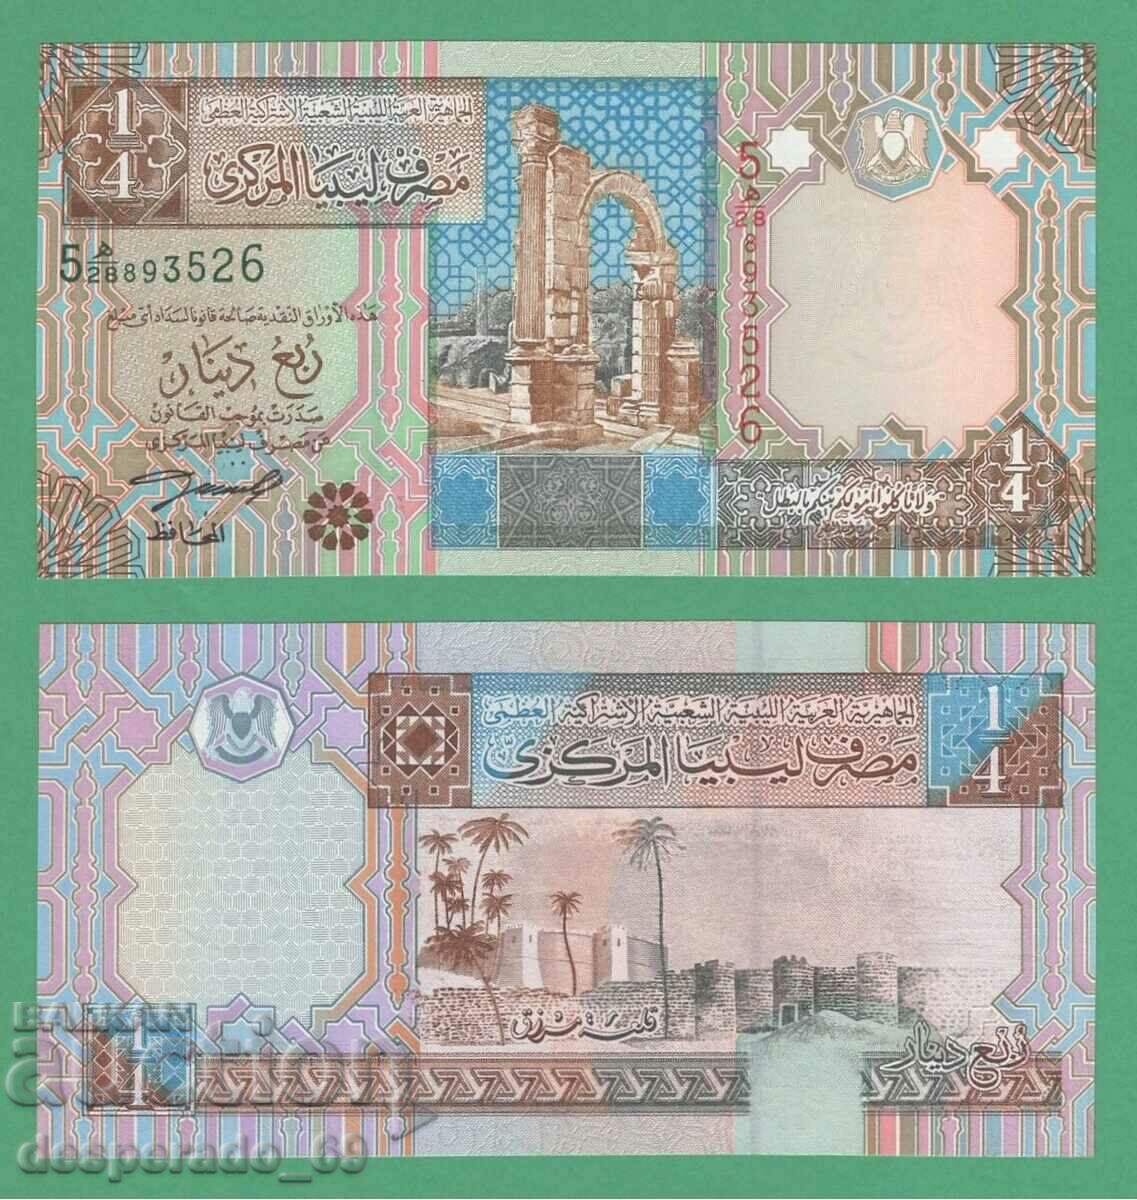 (¯`'•.¸ LIBYA 1/4 dinar 2002 UNC ¸.•'´¯)